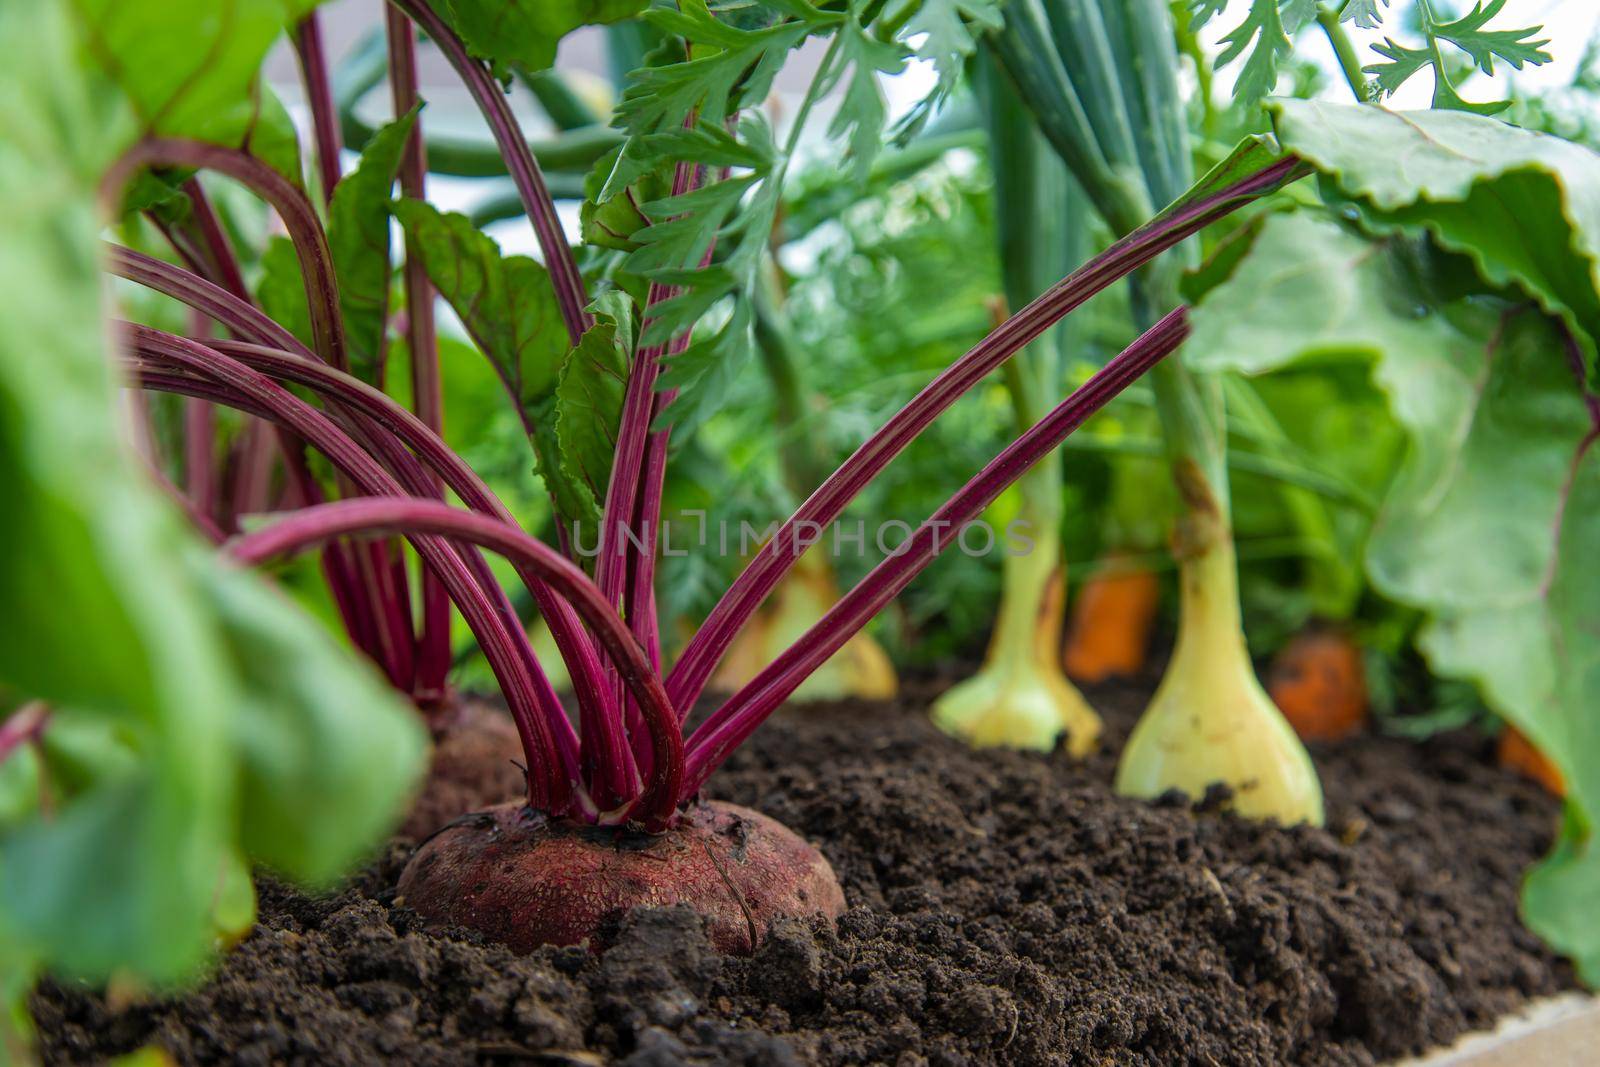 Vegetables grow in the garden. Selective focus. by yanadjana